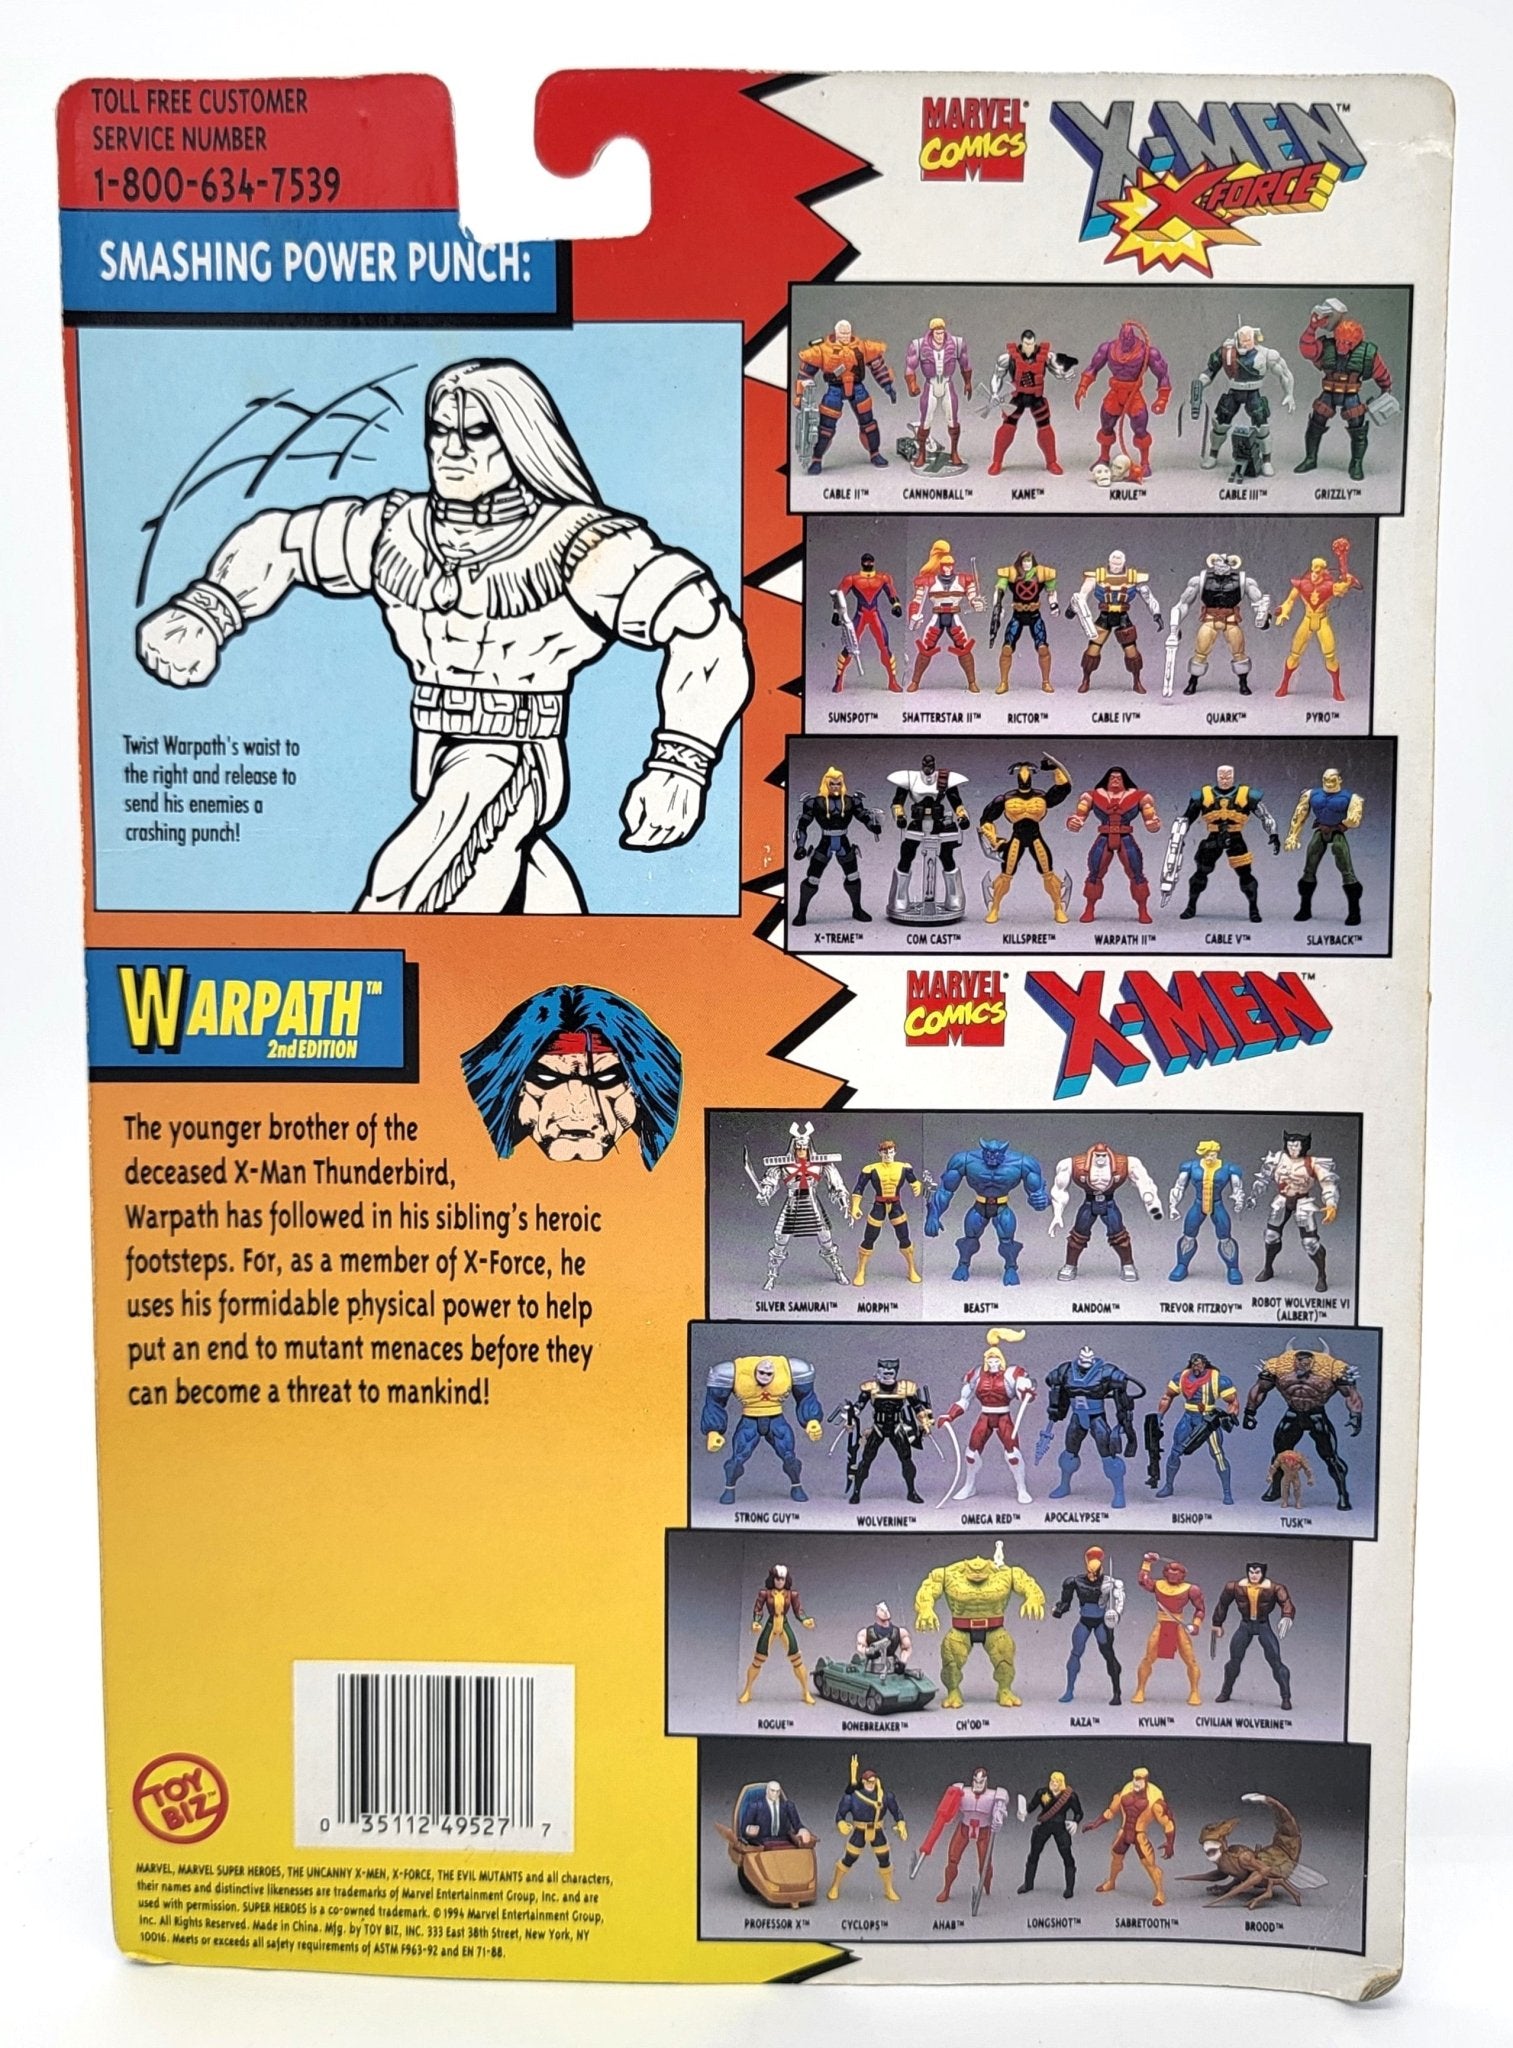 Toy Biz - Toy Biz | X-Men X-Force Warpath 1994 | Vintage Marvel Action Figure - Action Figures - Steady Bunny Shop